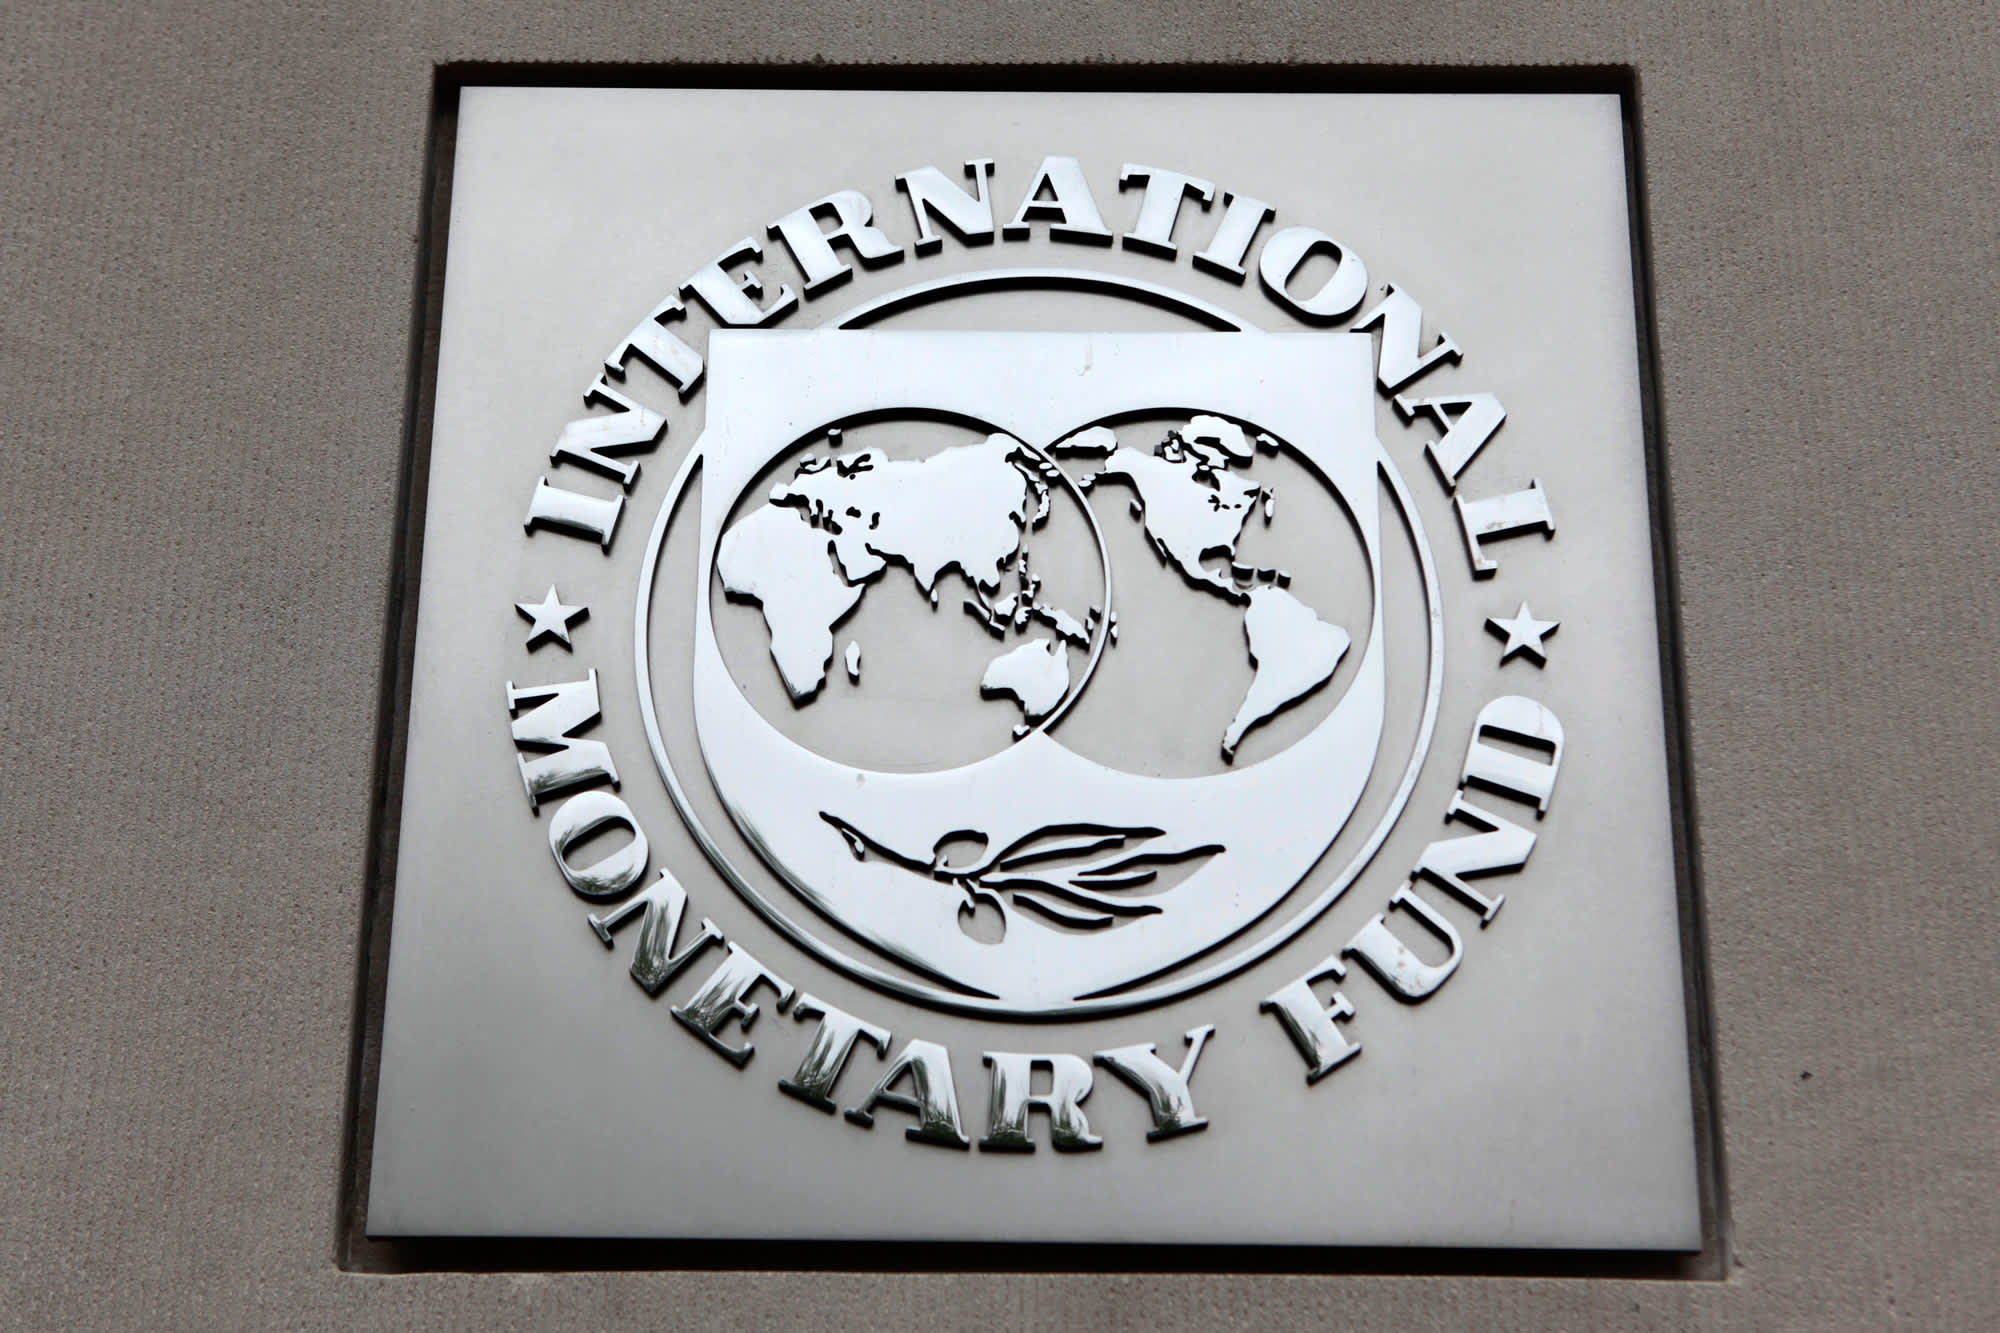 IMF claims a "key role" in ushering the digital money era